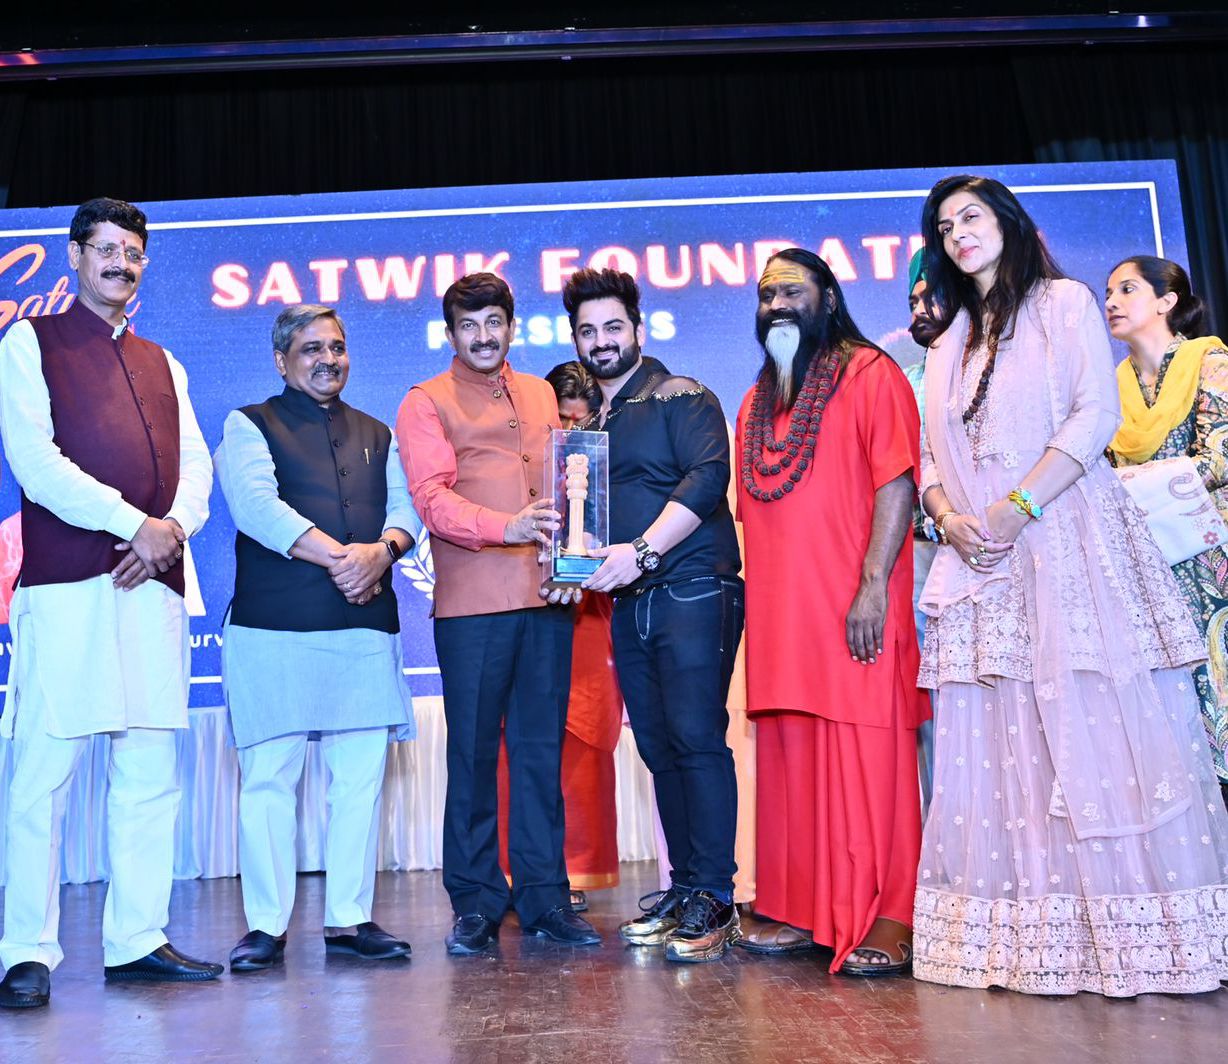 Global Business Achiever Award held in Delhi